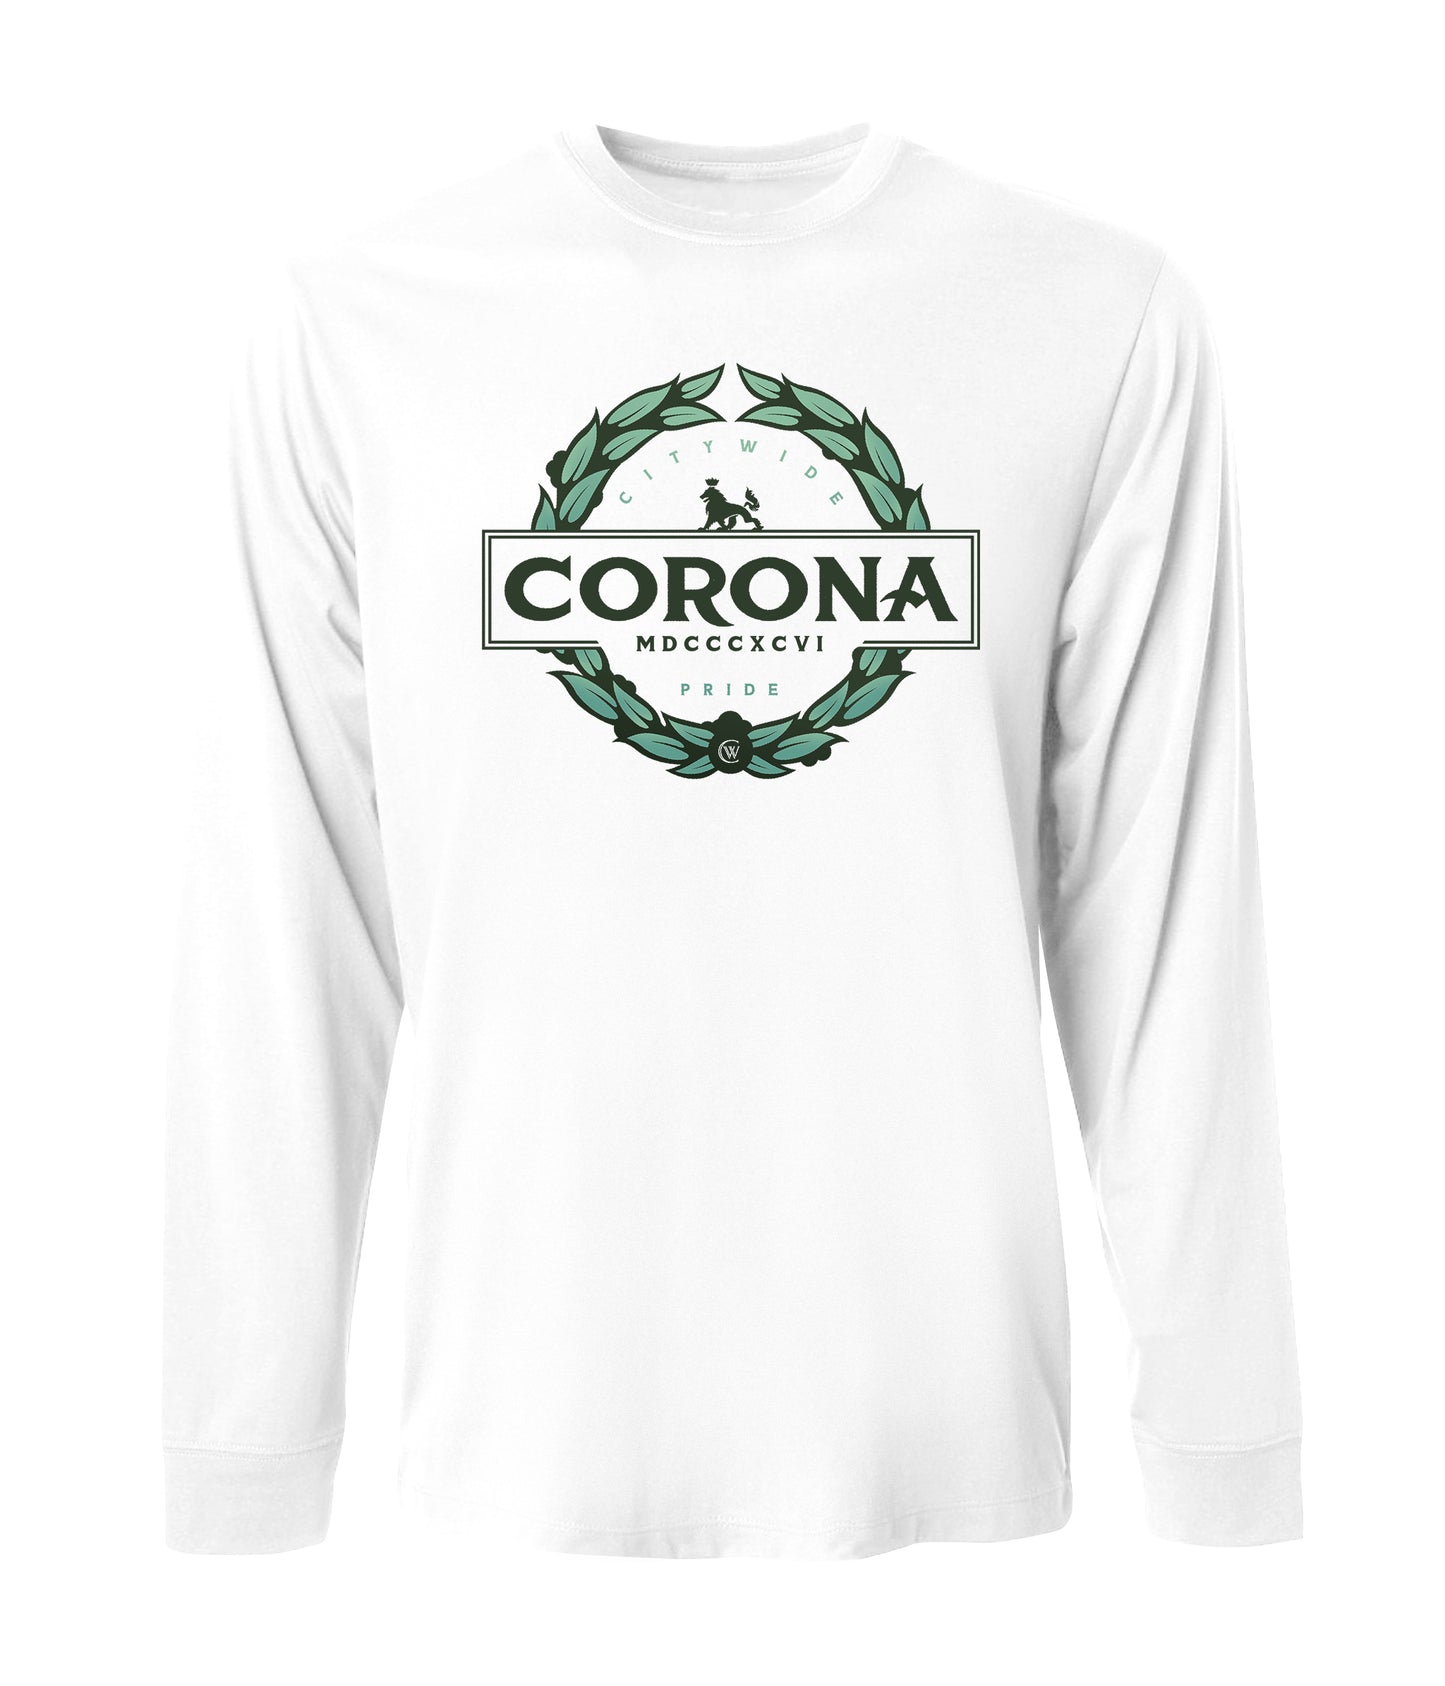 Corona The Pride Long Sleeve Tee